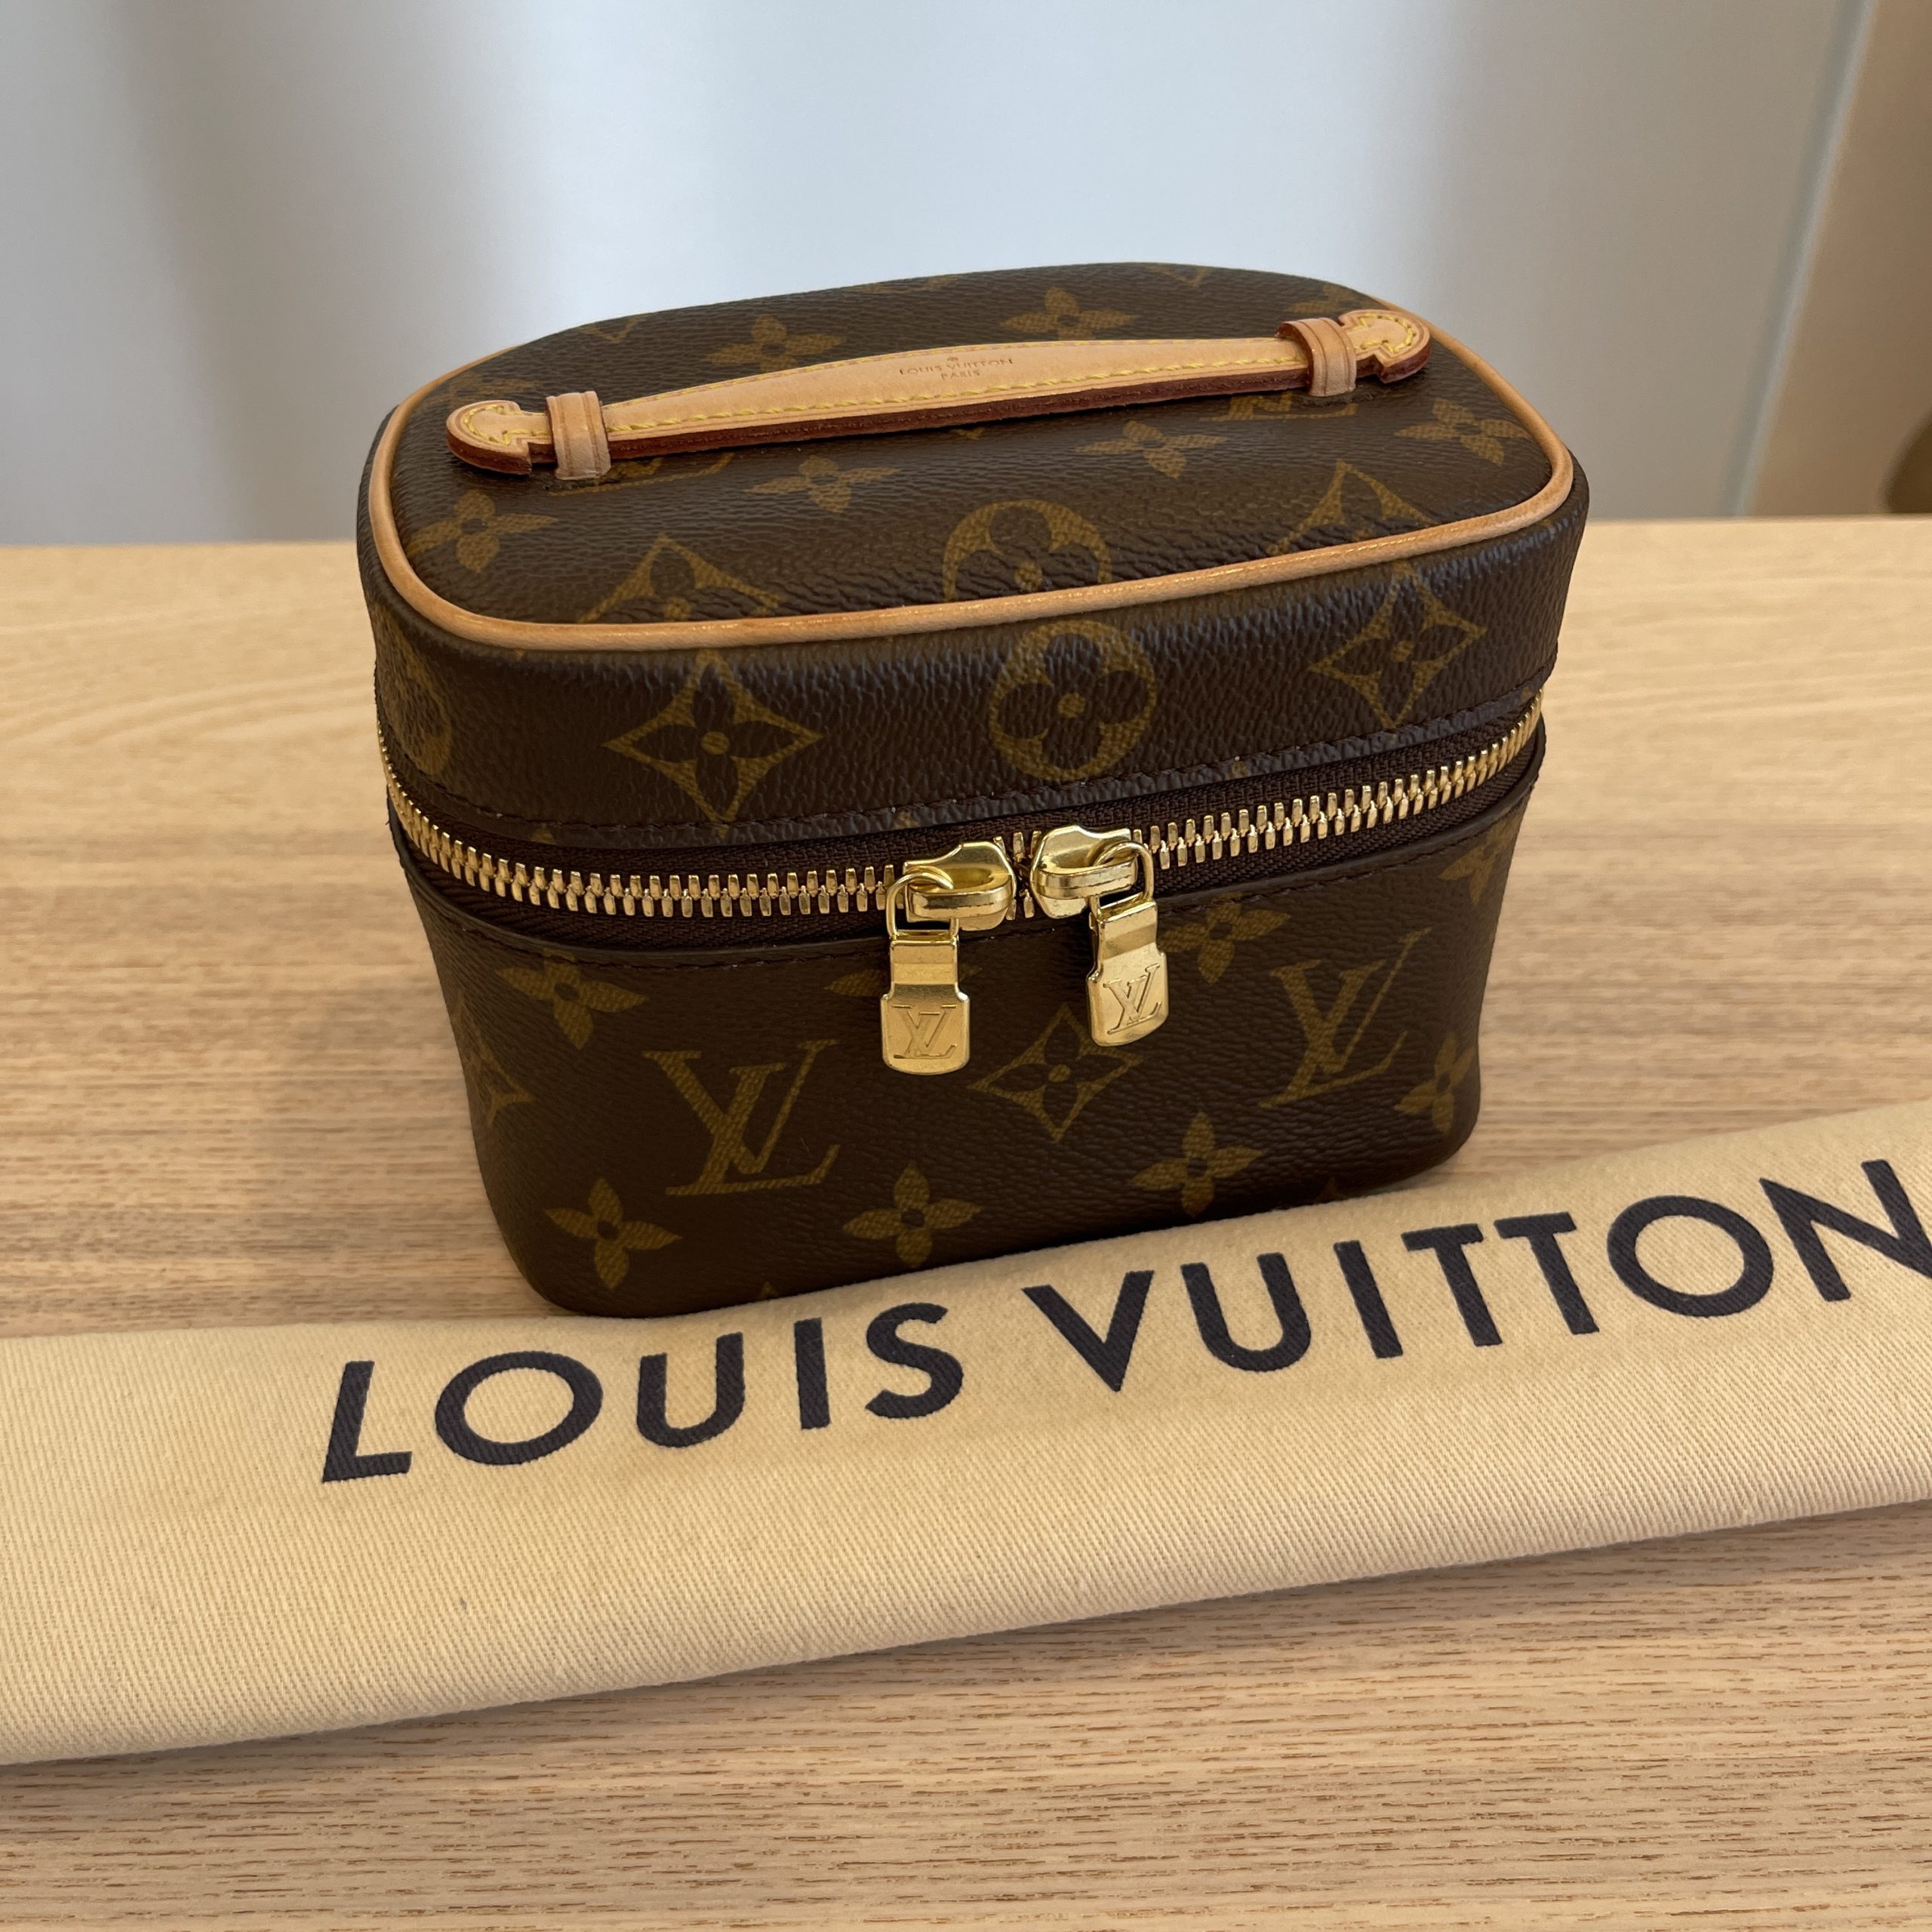 Louis Vuitton Nice Nano Toiletry Pouch Review